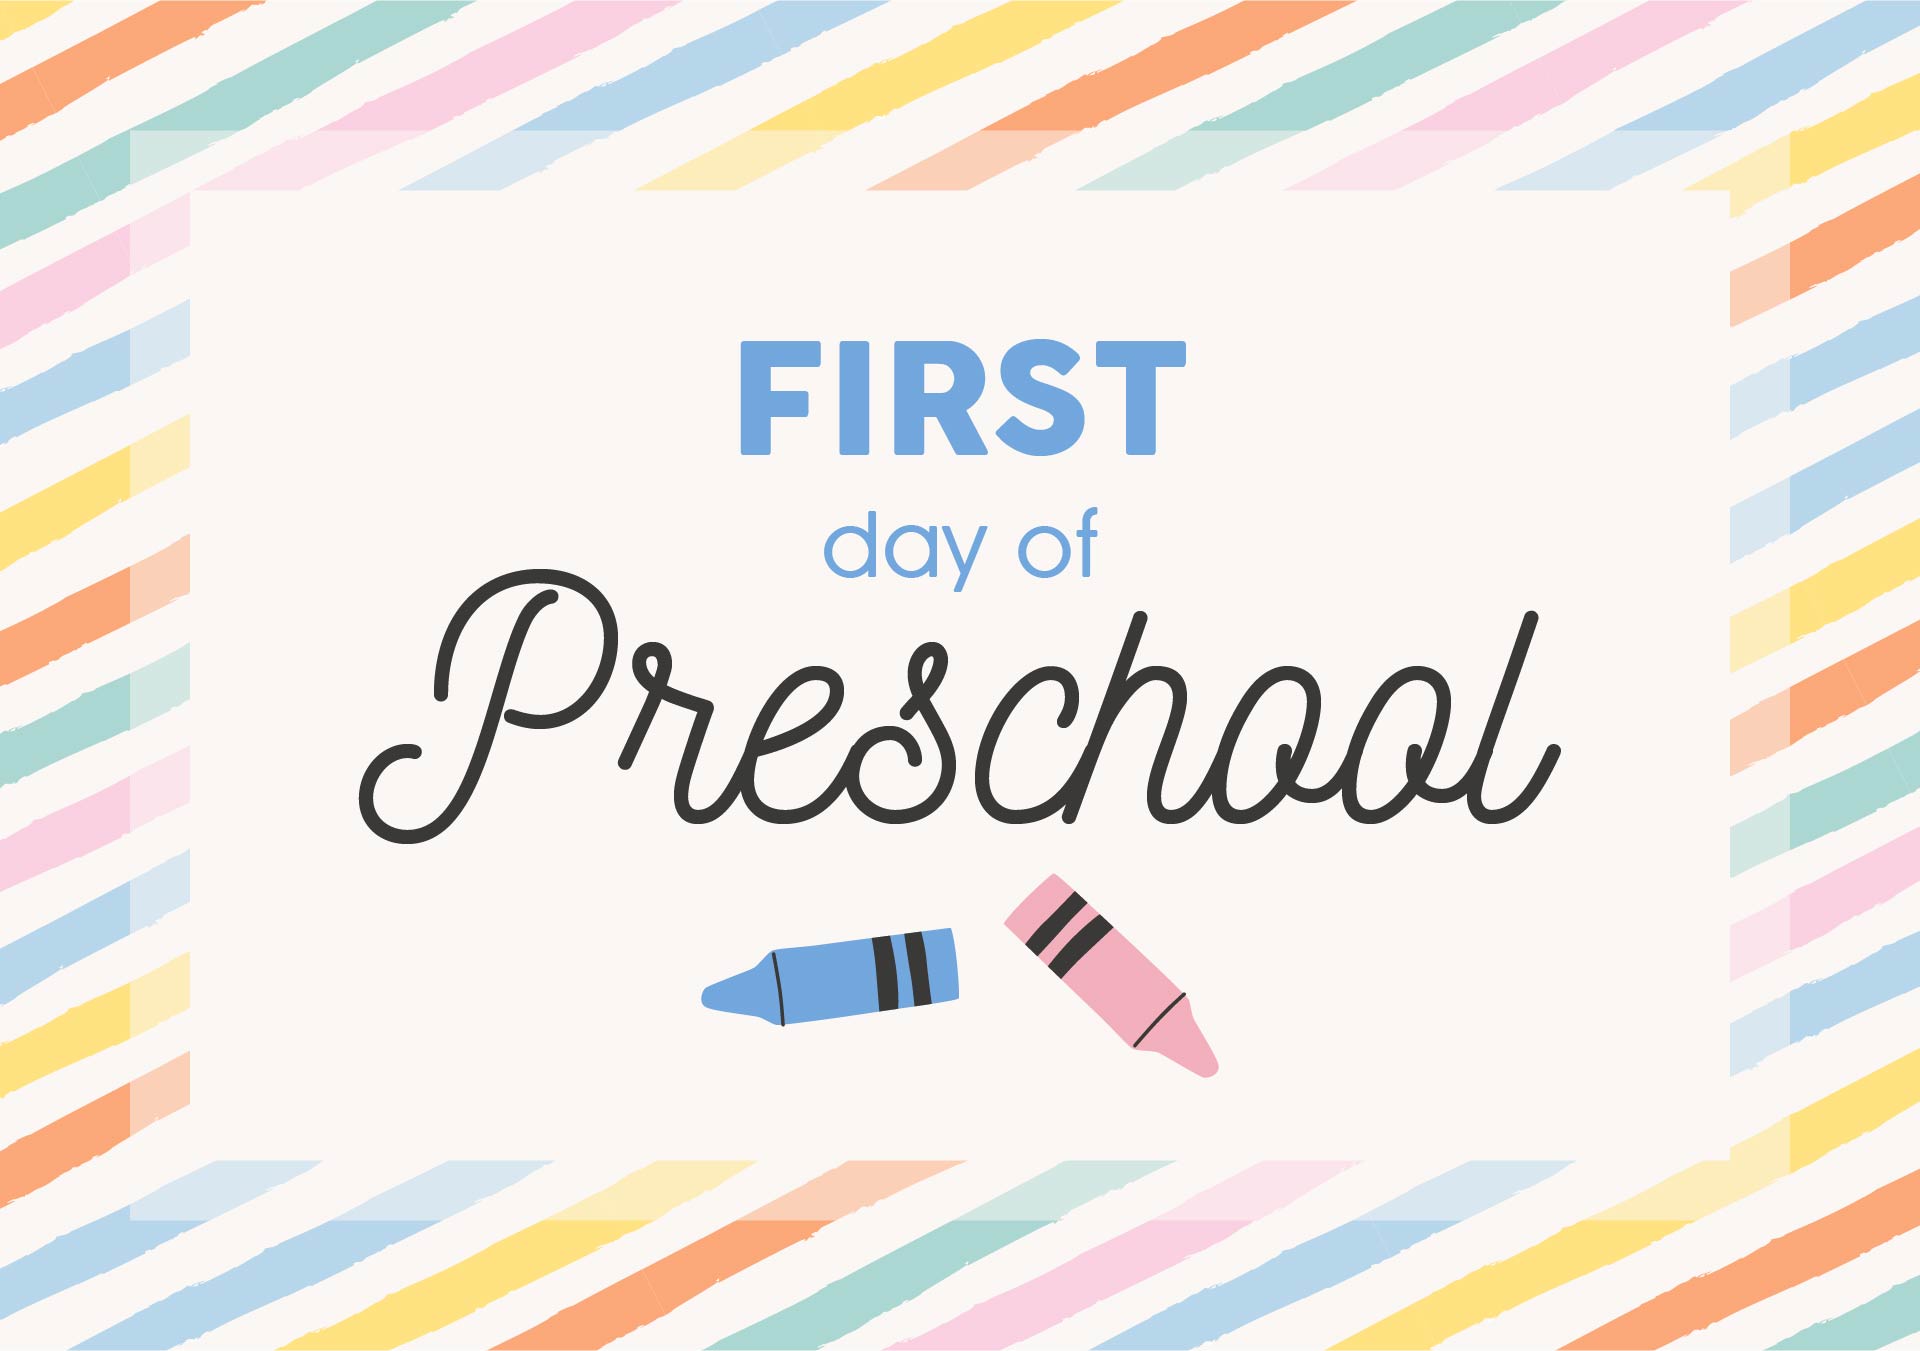 First Day Preschool Printable